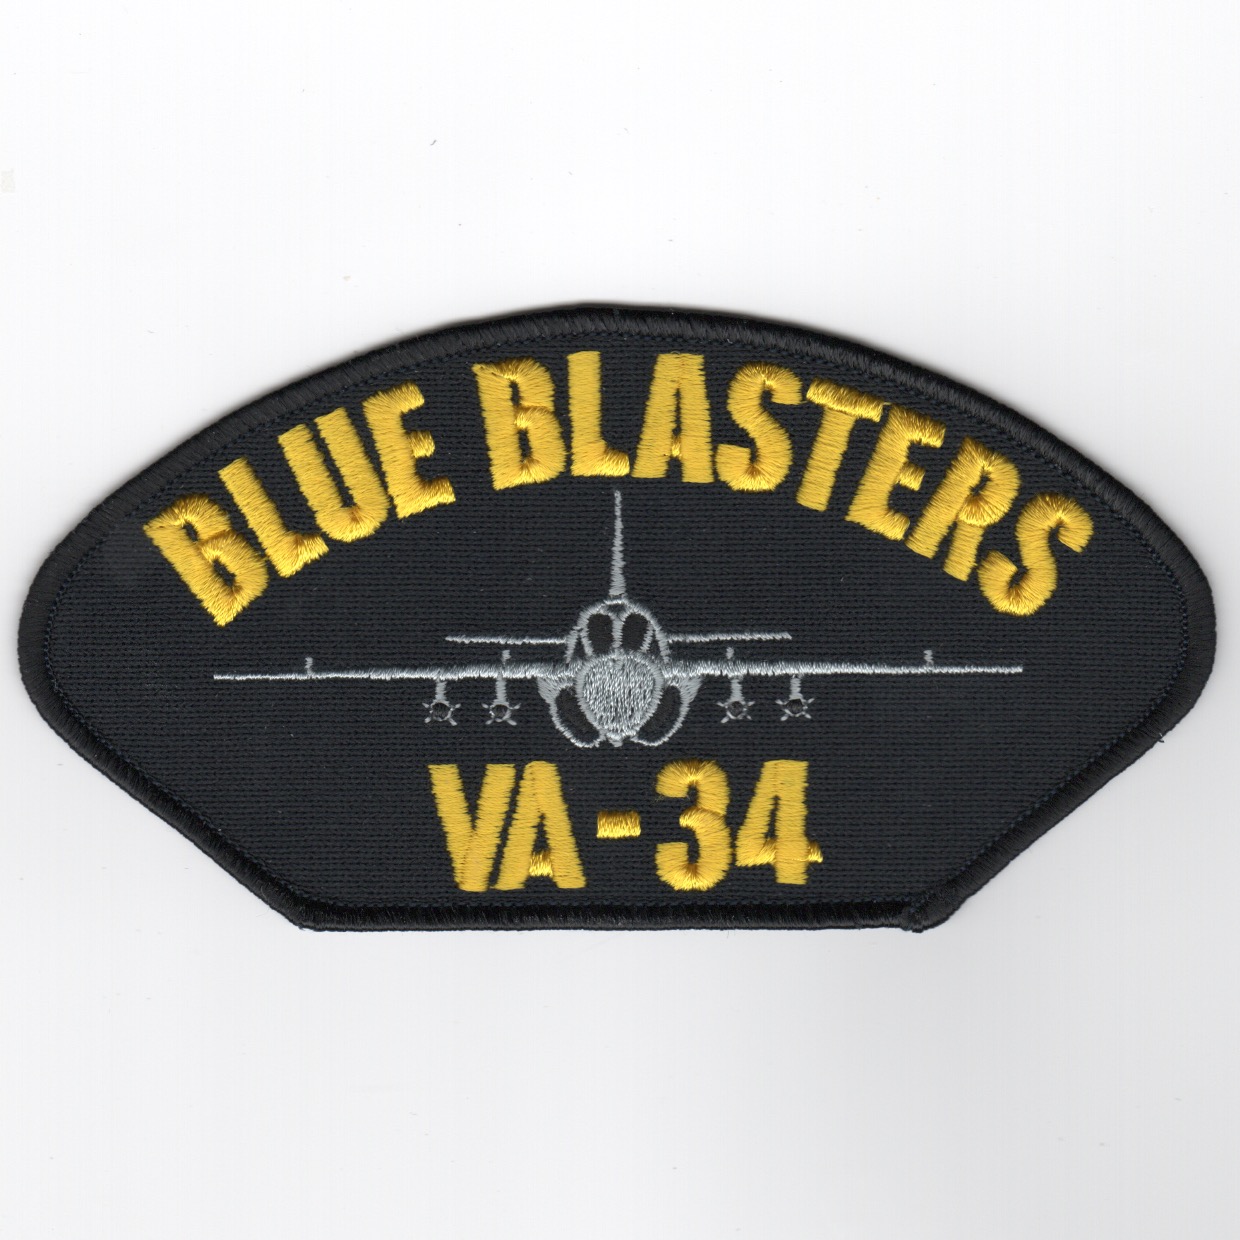 VA-34 Ballcap Patch